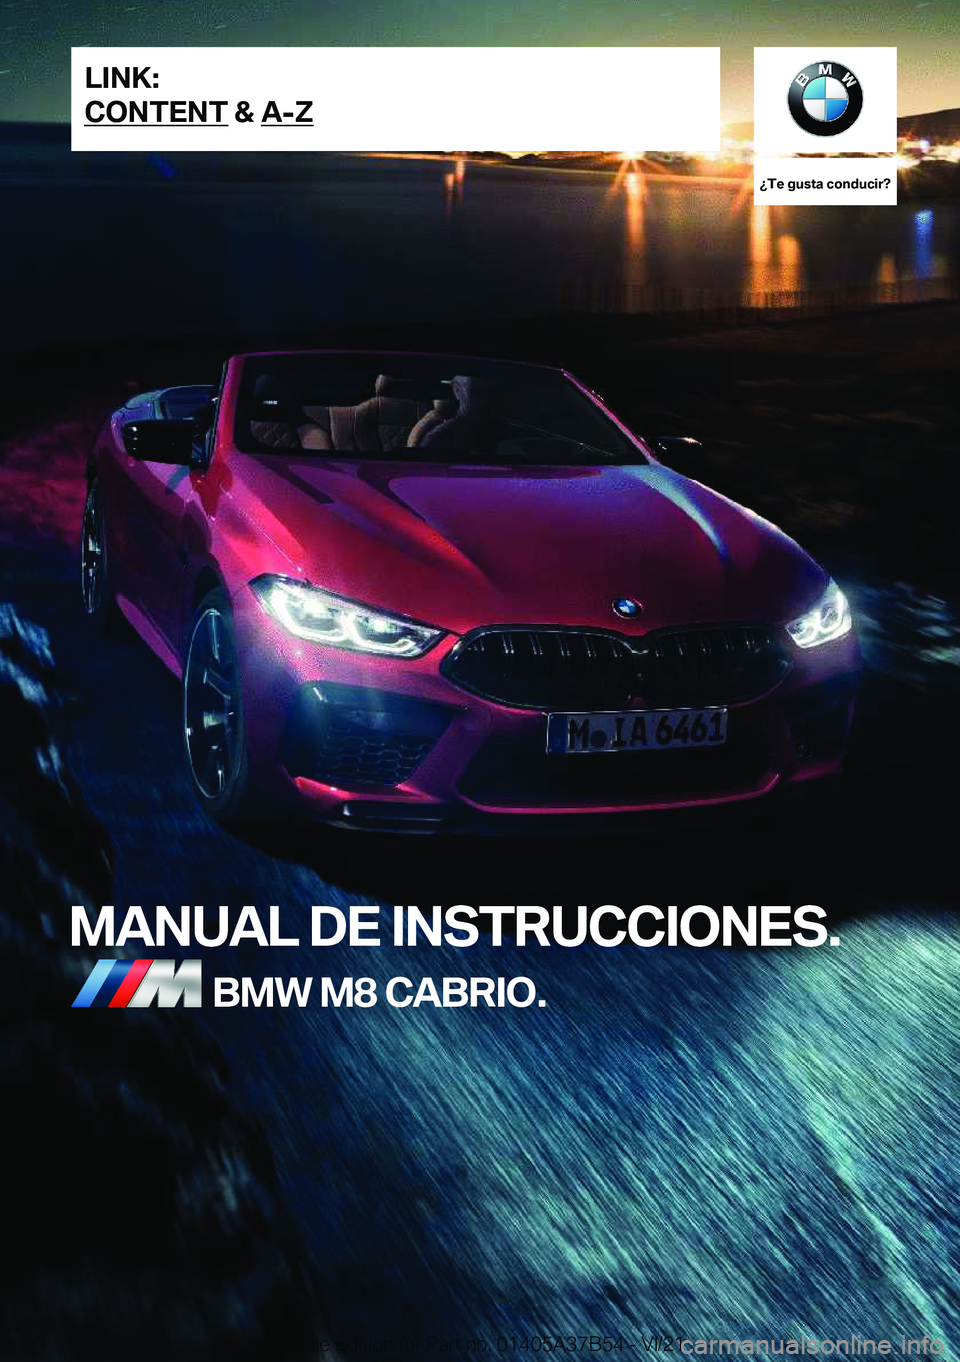 BMW M8 2022  Manuales de Empleo (in Spanish) ��T�e��g�u�s�t�a��c�o�n�d�u�c�i�r� 
�M�A�N�U�A�L��D�E��I�N�S�T�R�U�C�C�I�O�N�E�S�.�B�M�W��M�8��C�A�B�R�I�O�.�L�I�N�K�:
�C�O�N�T�E�N�T��&��A�-�Z�O�n�l�i�n�e��E�d�i�t�i�o�n��f�o�r��P�a�r�t�